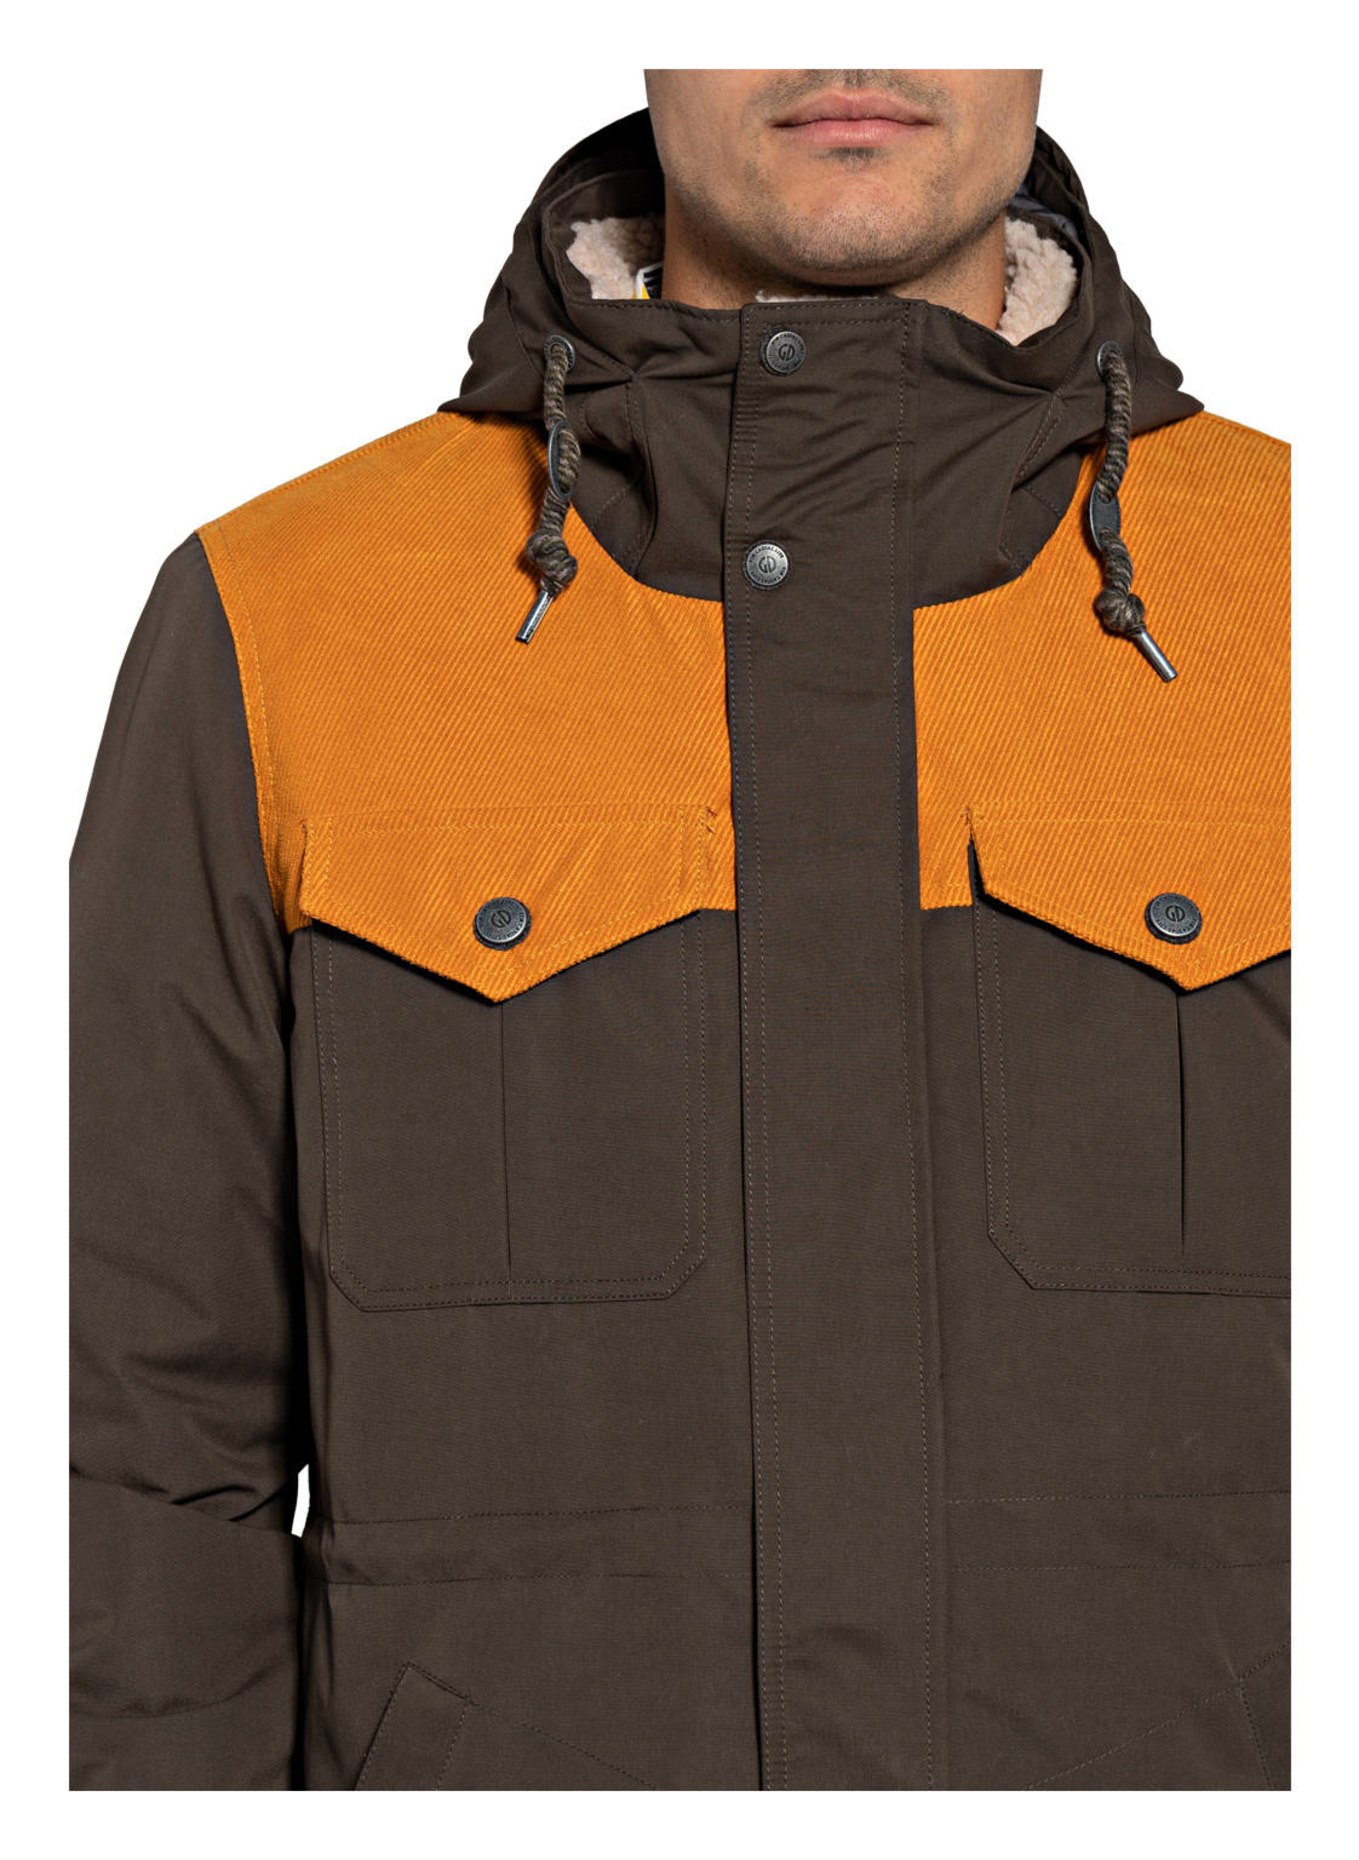 G.I.G.A. DX by killtec Outdoor brown/ in orange dark STORMIGA jacket